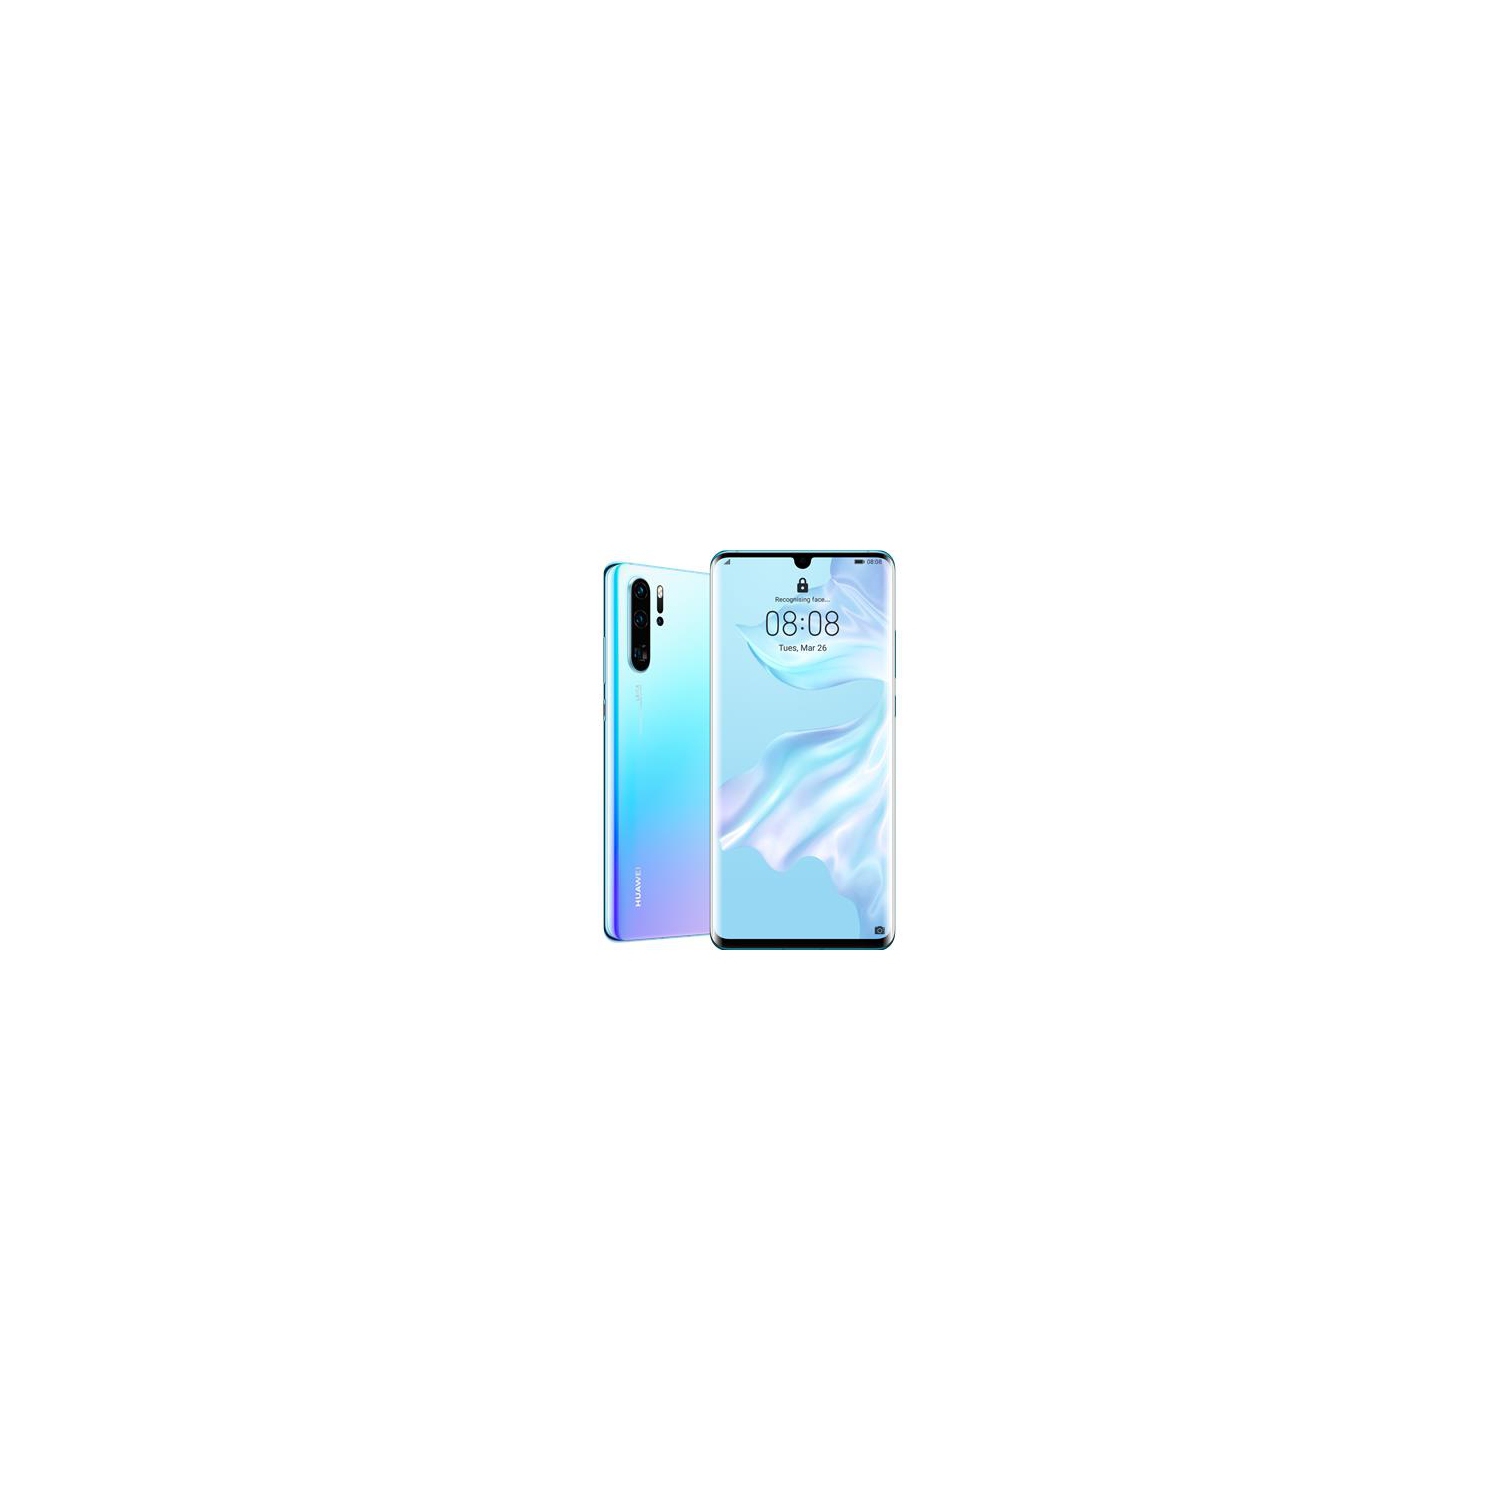 Huawei P30 Pro (VOG-L04) 128GB Smartphone - Unlocked - Breathing Crystal - Certified Pre-Owned